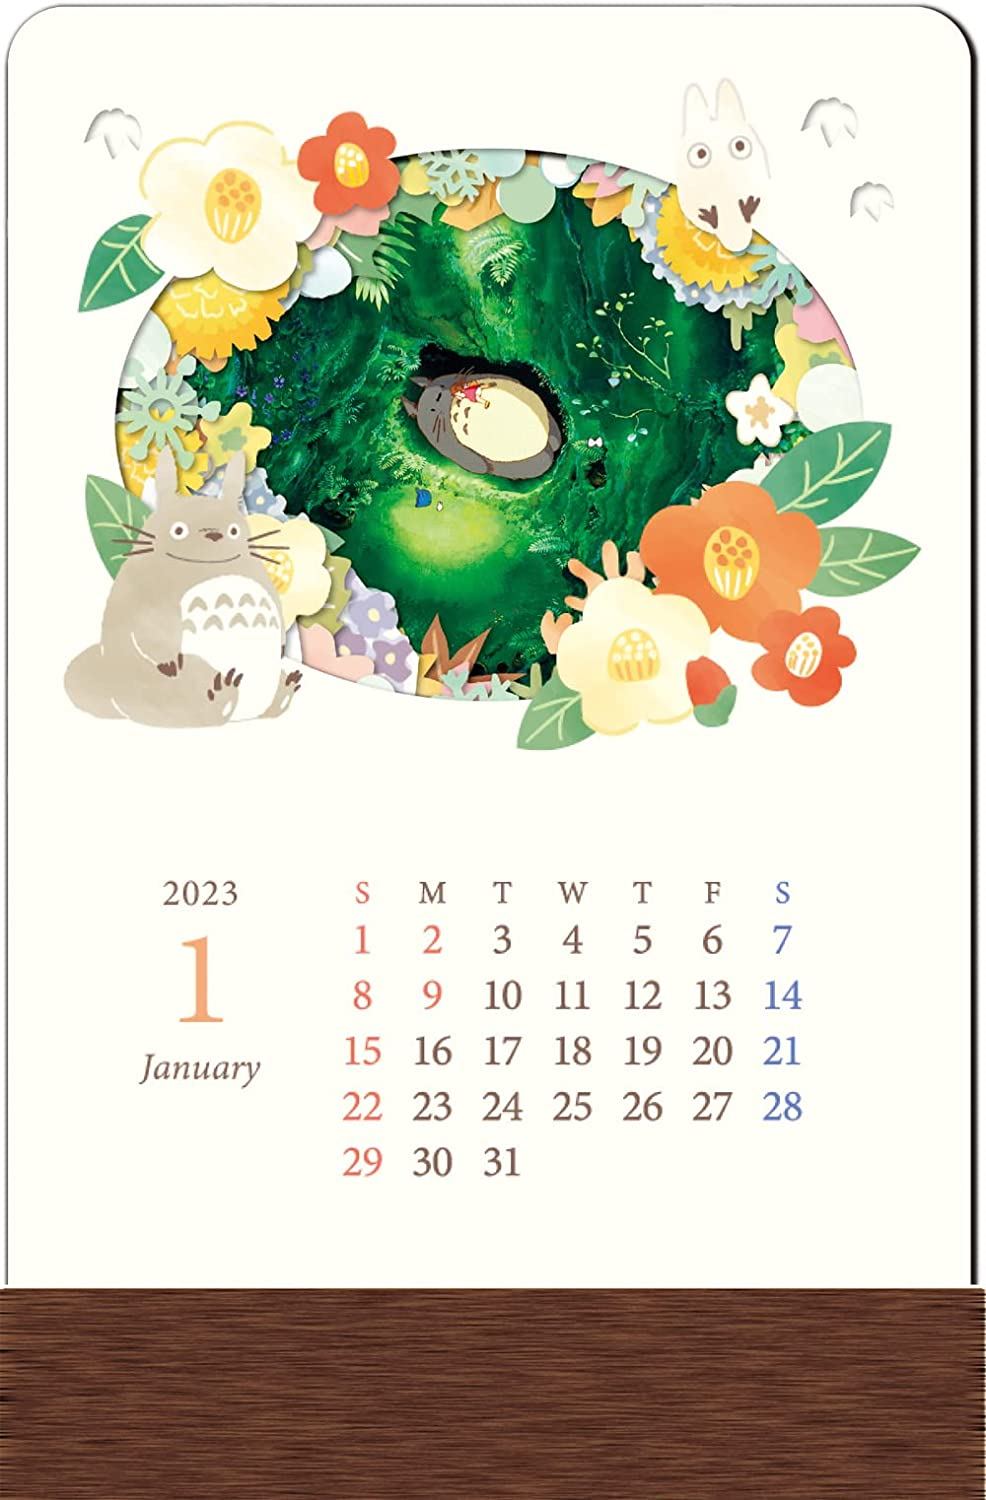 Studio Ghibli Series - My Neighbor Totoro Kasanaru Calendar 2023